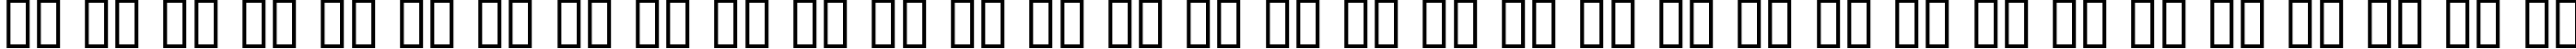 Пример написания русского алфавита шрифтом Blade Runner Movie Font